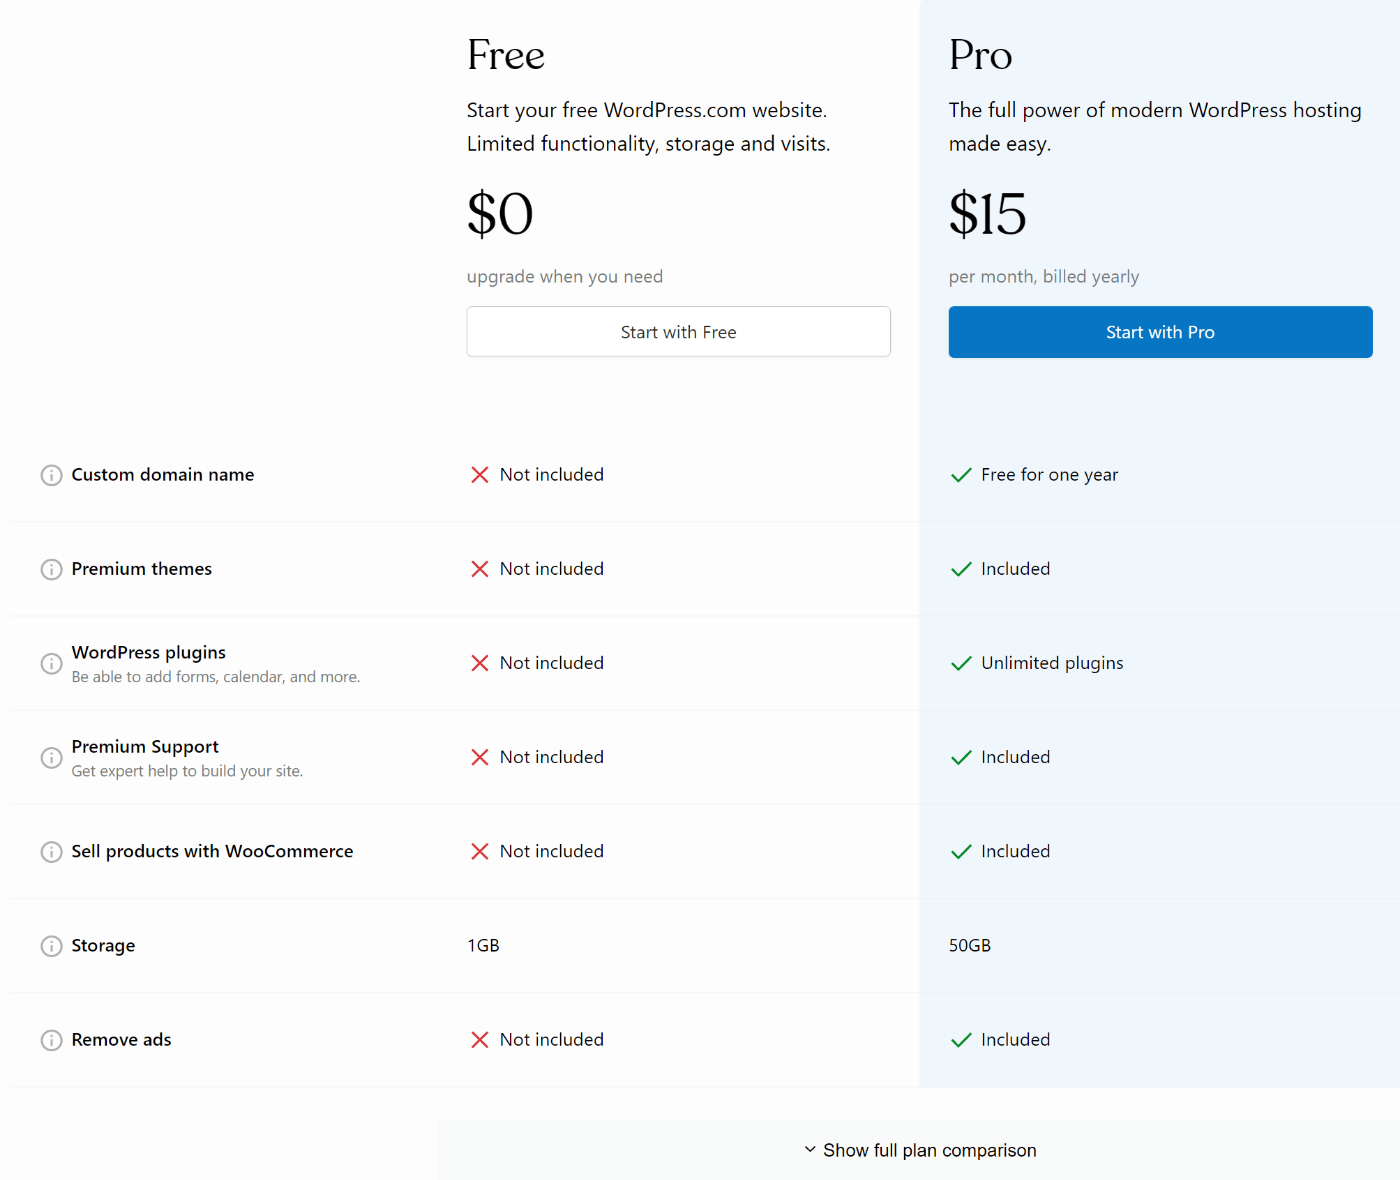 WordPress.com pricing (as of May 2022)